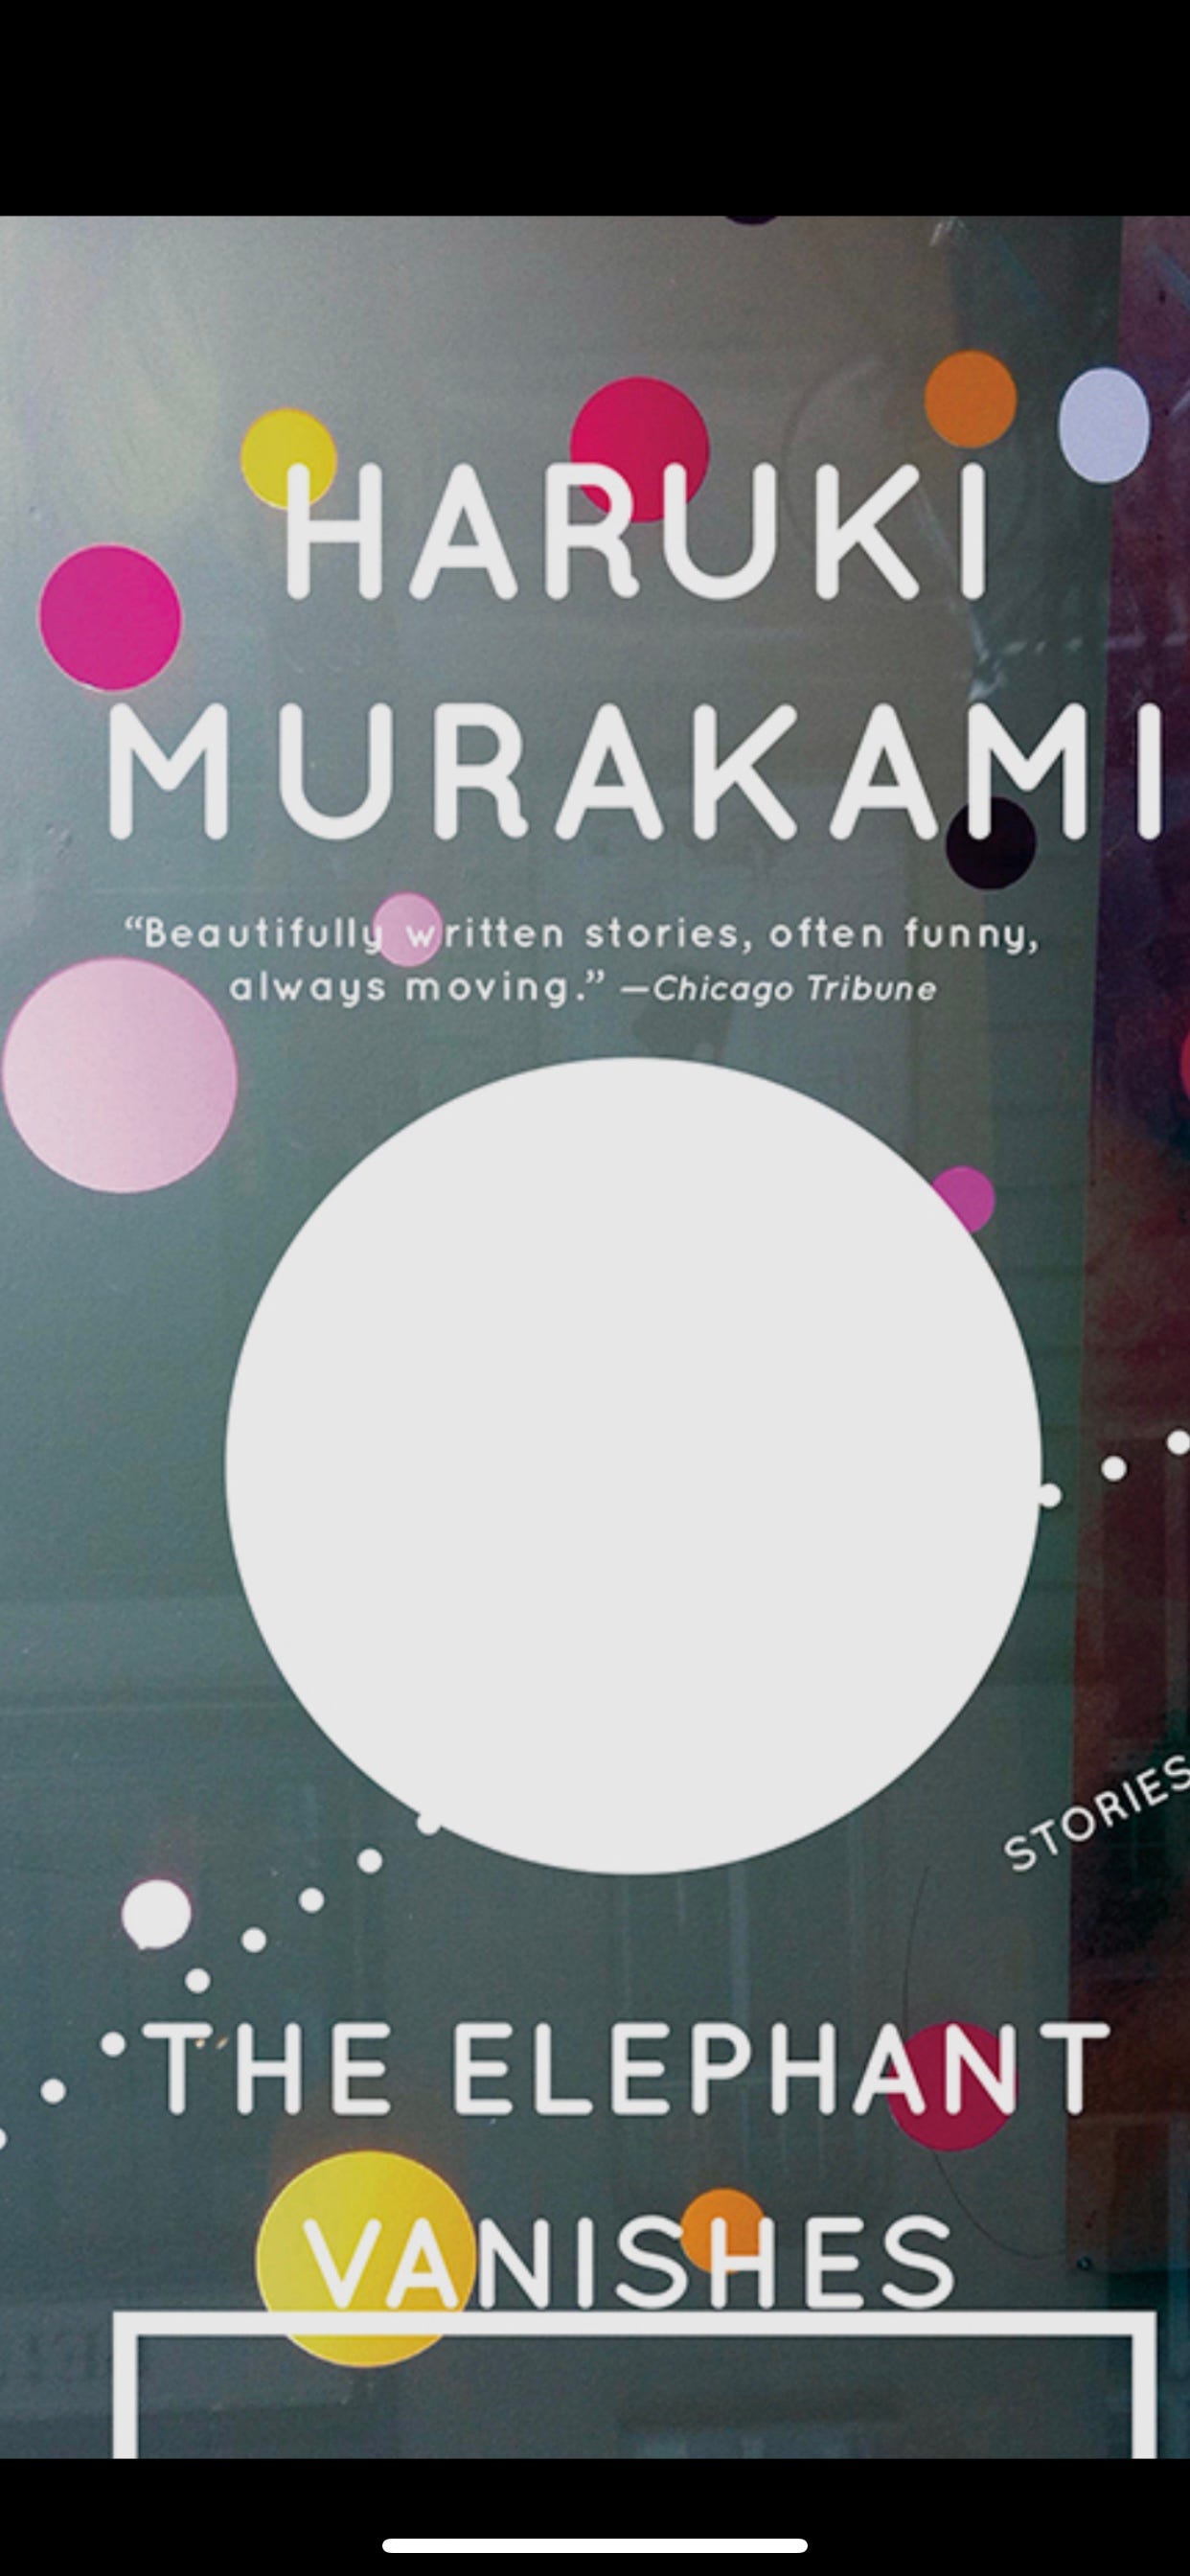 Haruki Murakami: Still a fresh short story” THE ELEPHANT VANISHES” | by 高橋  政和 | Medium